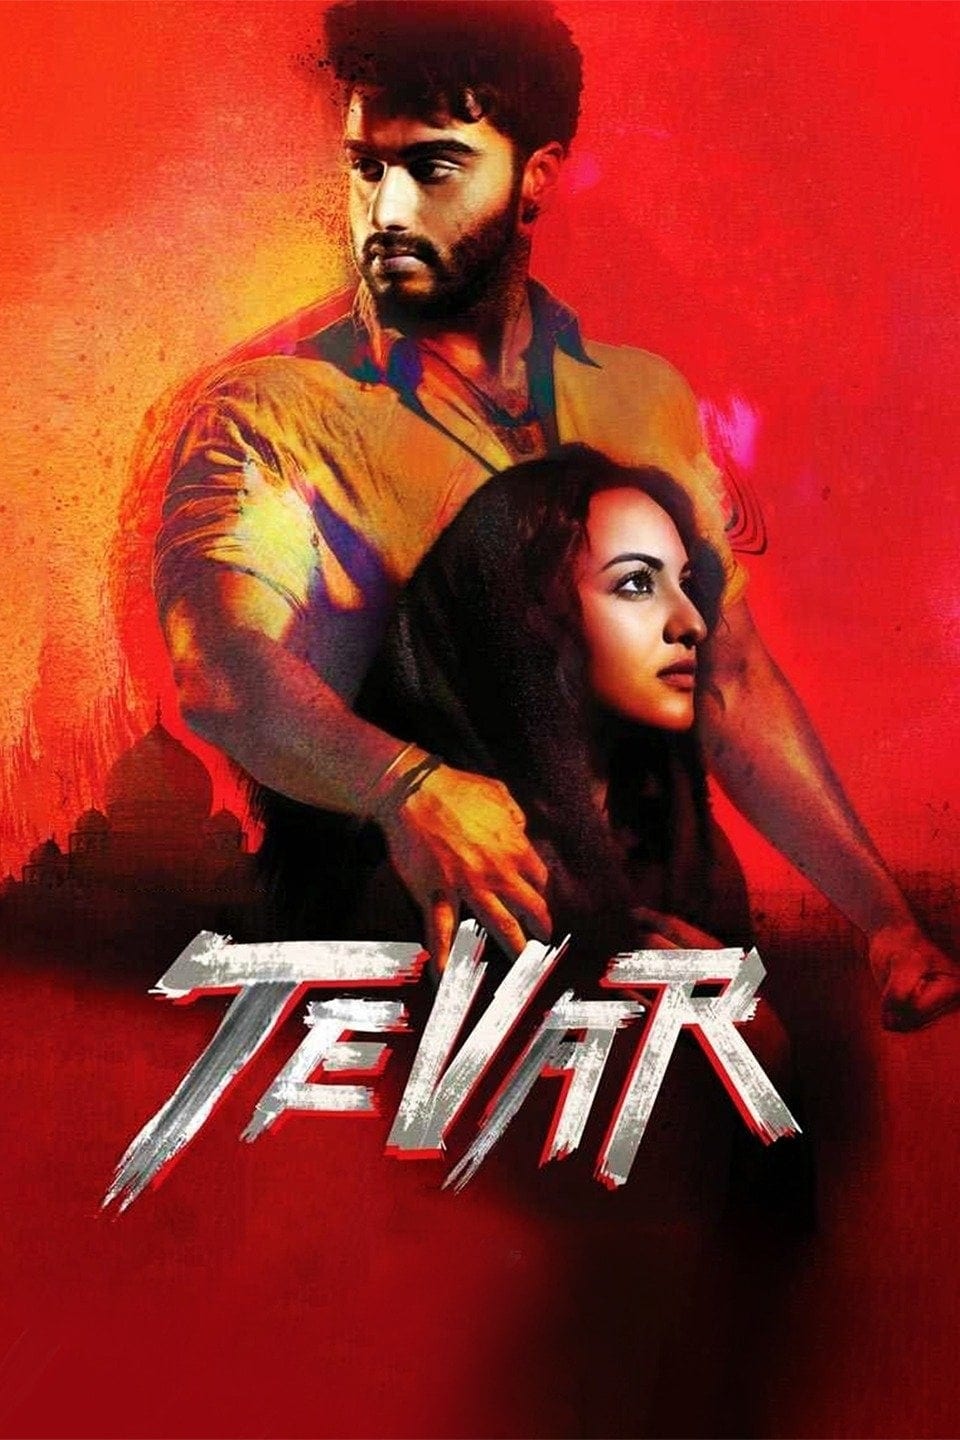 Poster for the movie "Tevar"